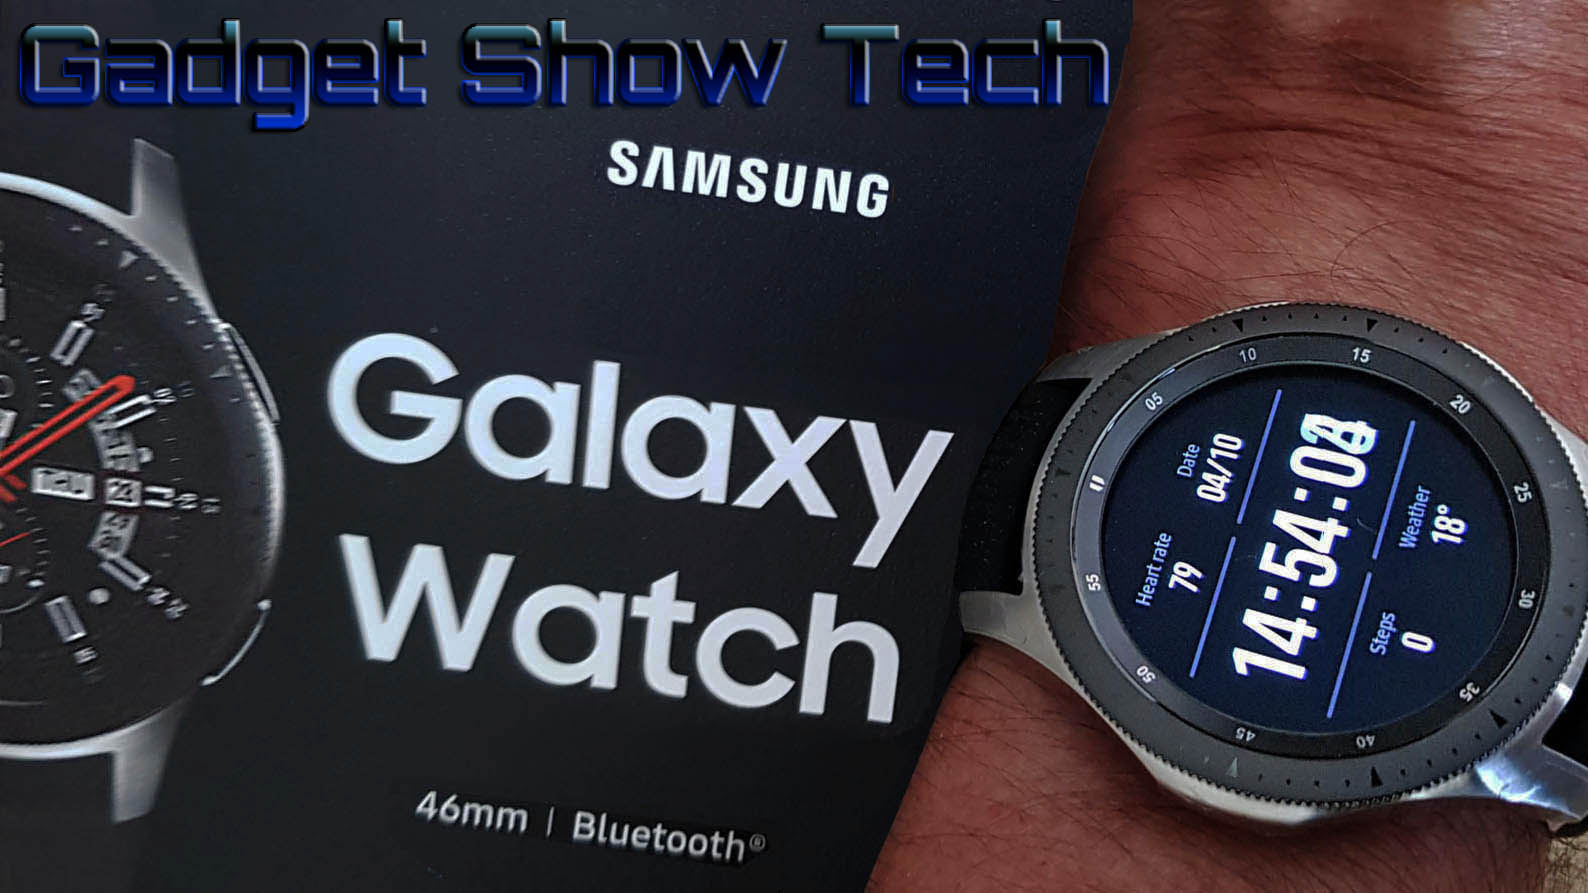 Samsung Gear S2 vs Apple Watch - Ultimate Smartwatch Comparison 2016